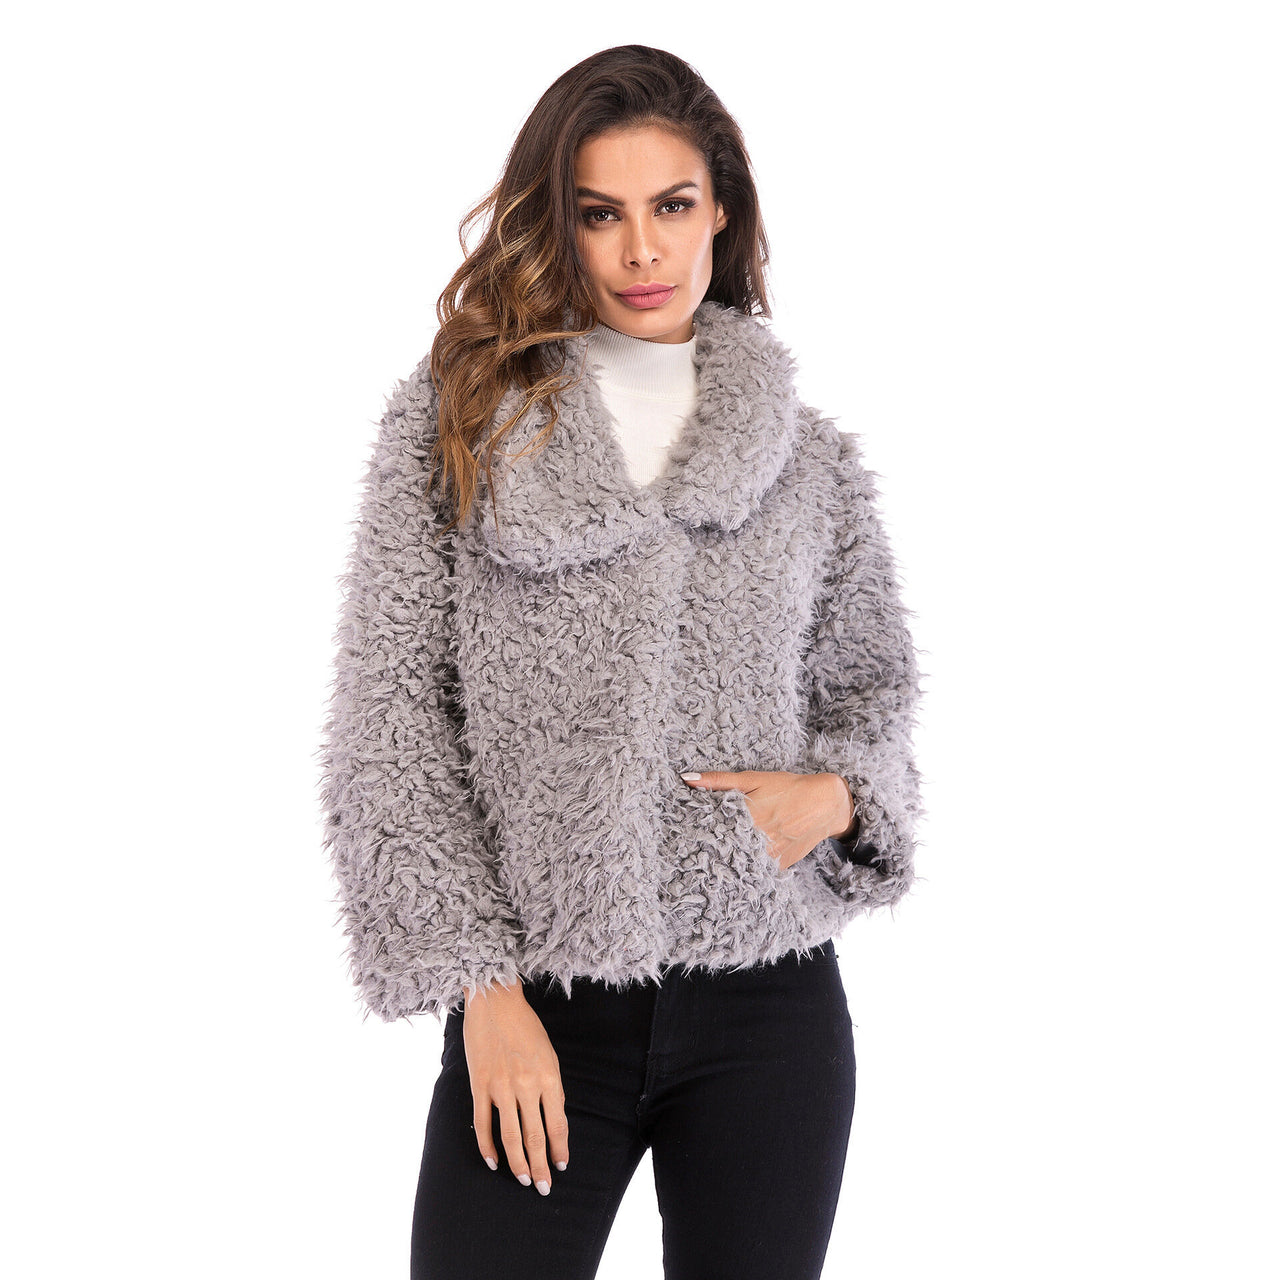 Women's Coat Fashion Lapel Faux Shearling Shaggy Oversized Coat Jacket Warm Winter